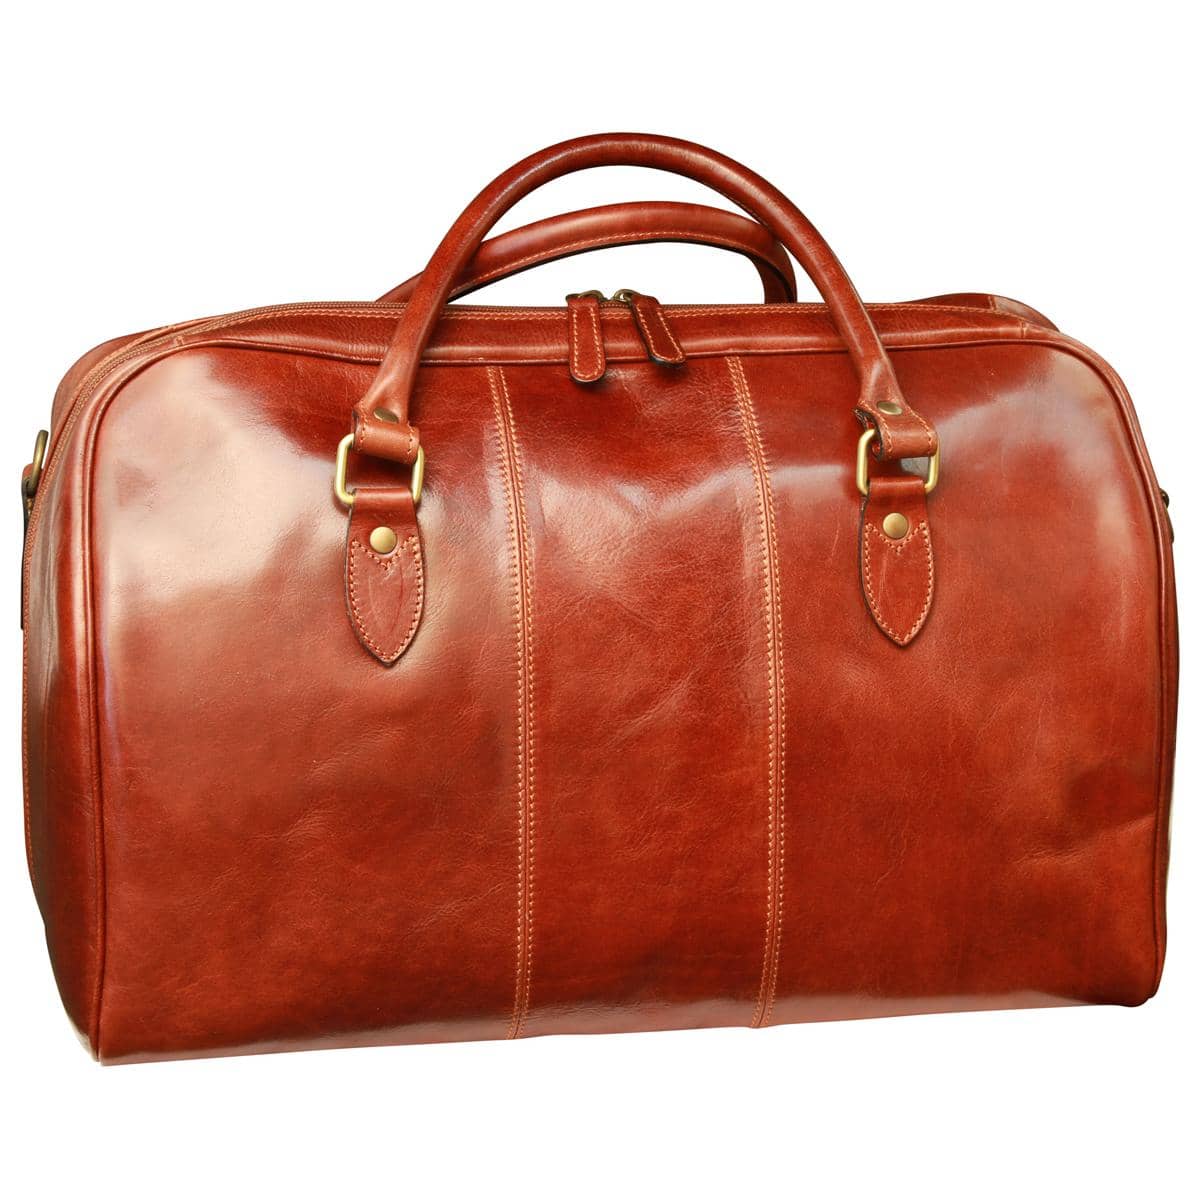 italian luggage travel bags : made in italy italian luggage luxury ...